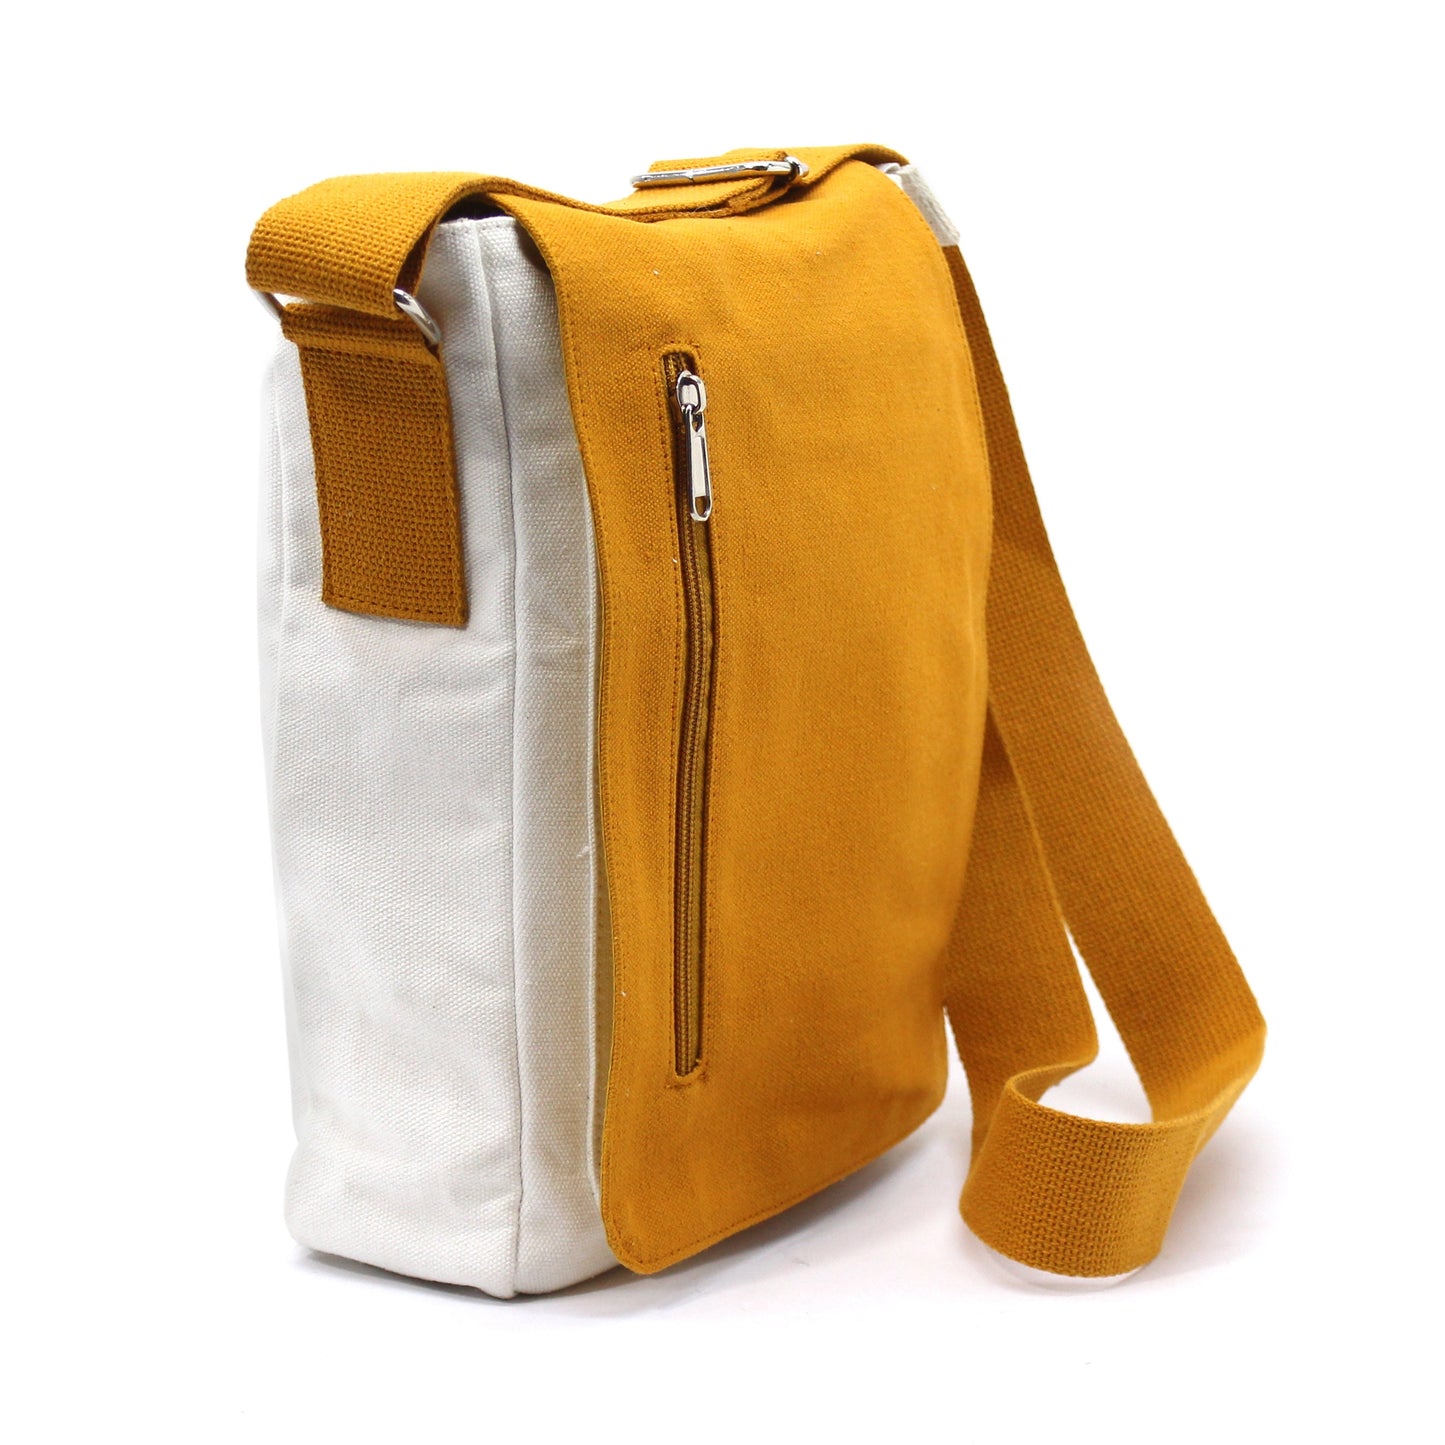 Only Viking Tote/Canvas Bag Unisex Shoulder Handbags